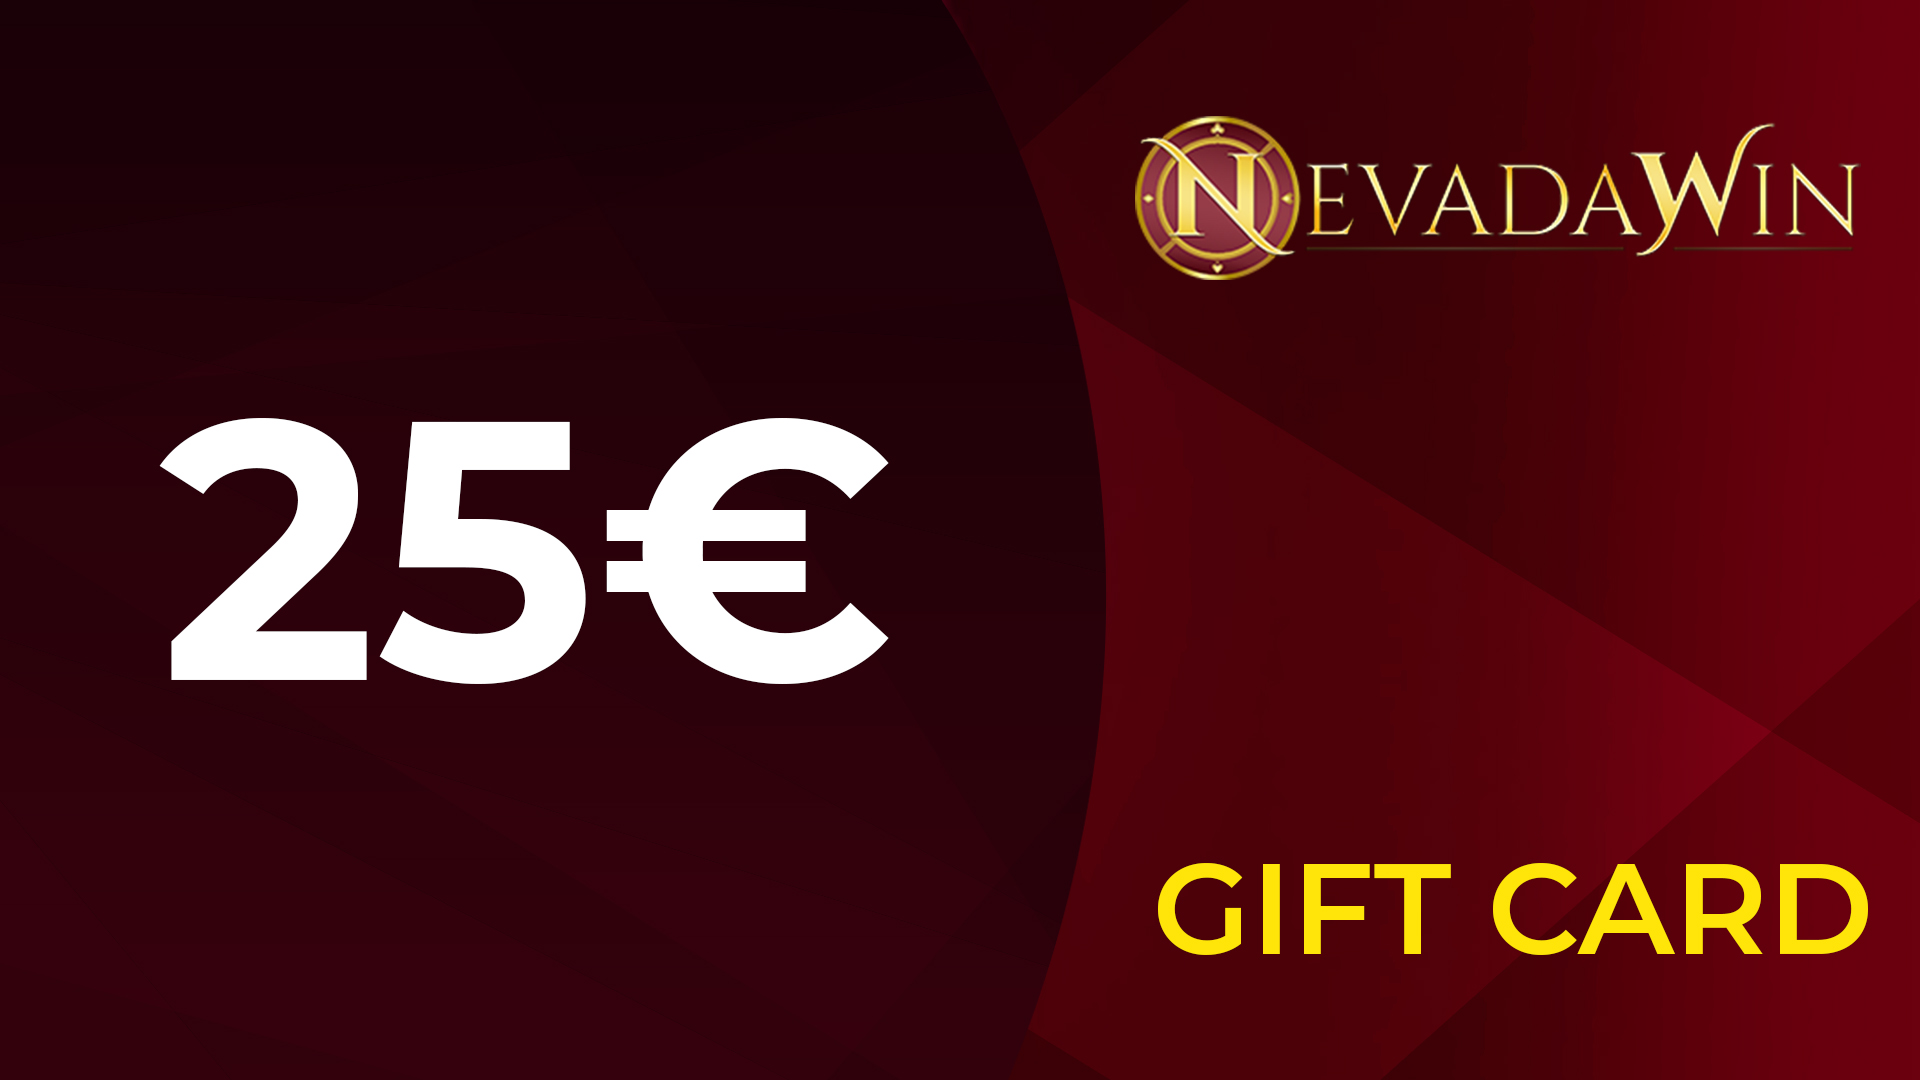 NevadaWin €25 Giftcard